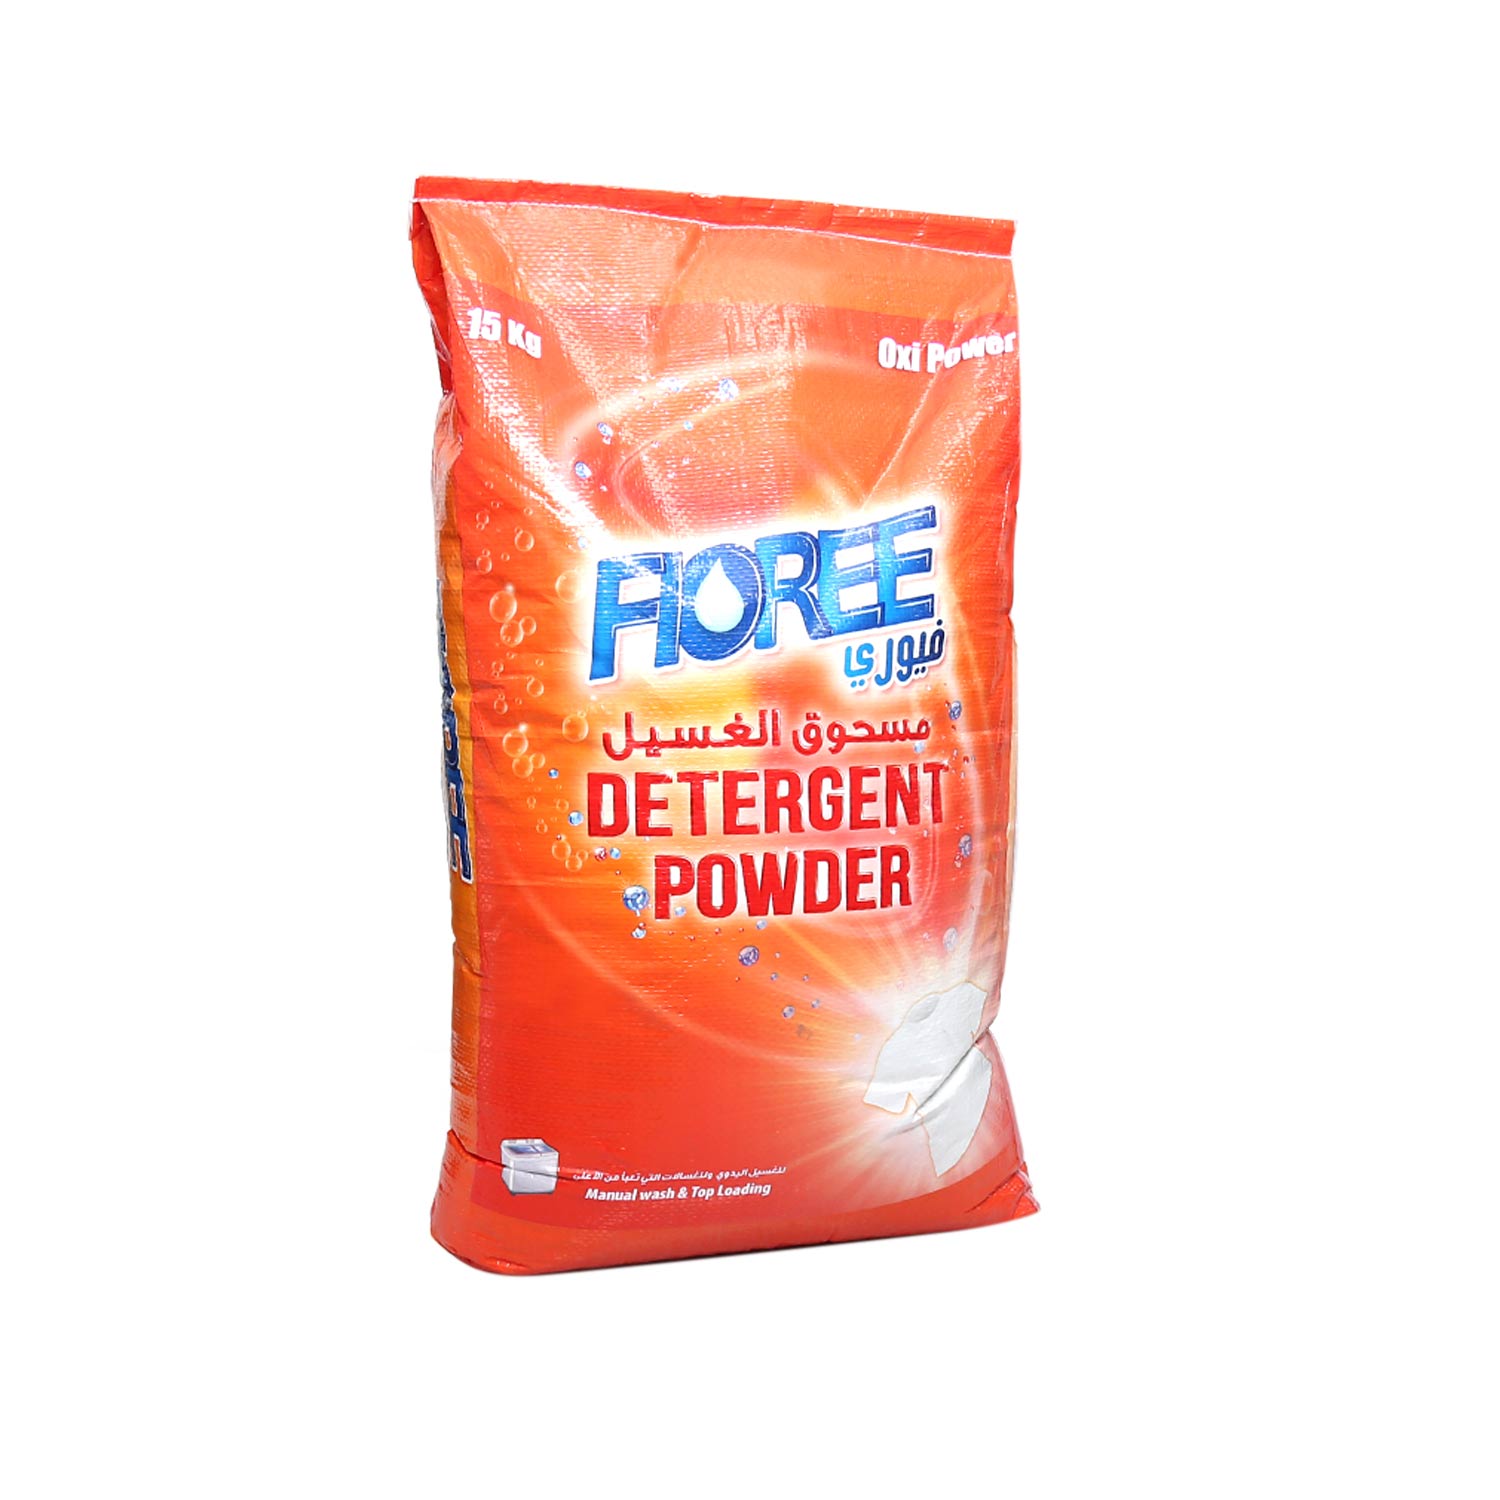 Fioree Detergent Powder (Oxi Power, 15 kg Woven Bag)